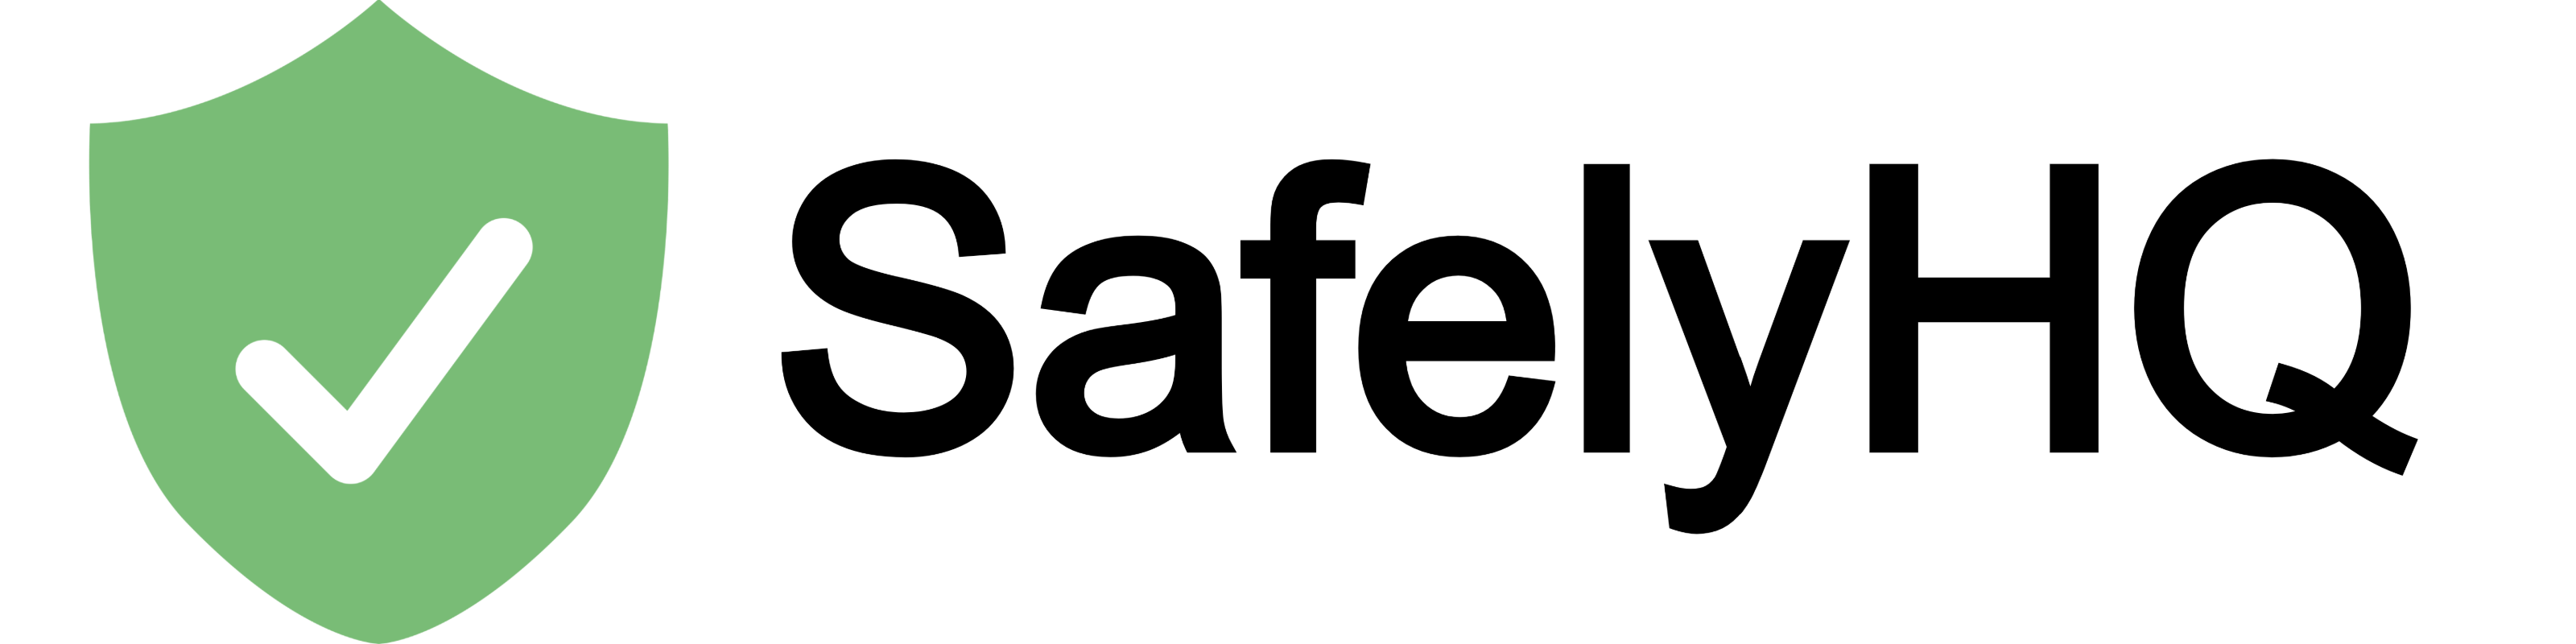 Safelyhq logo